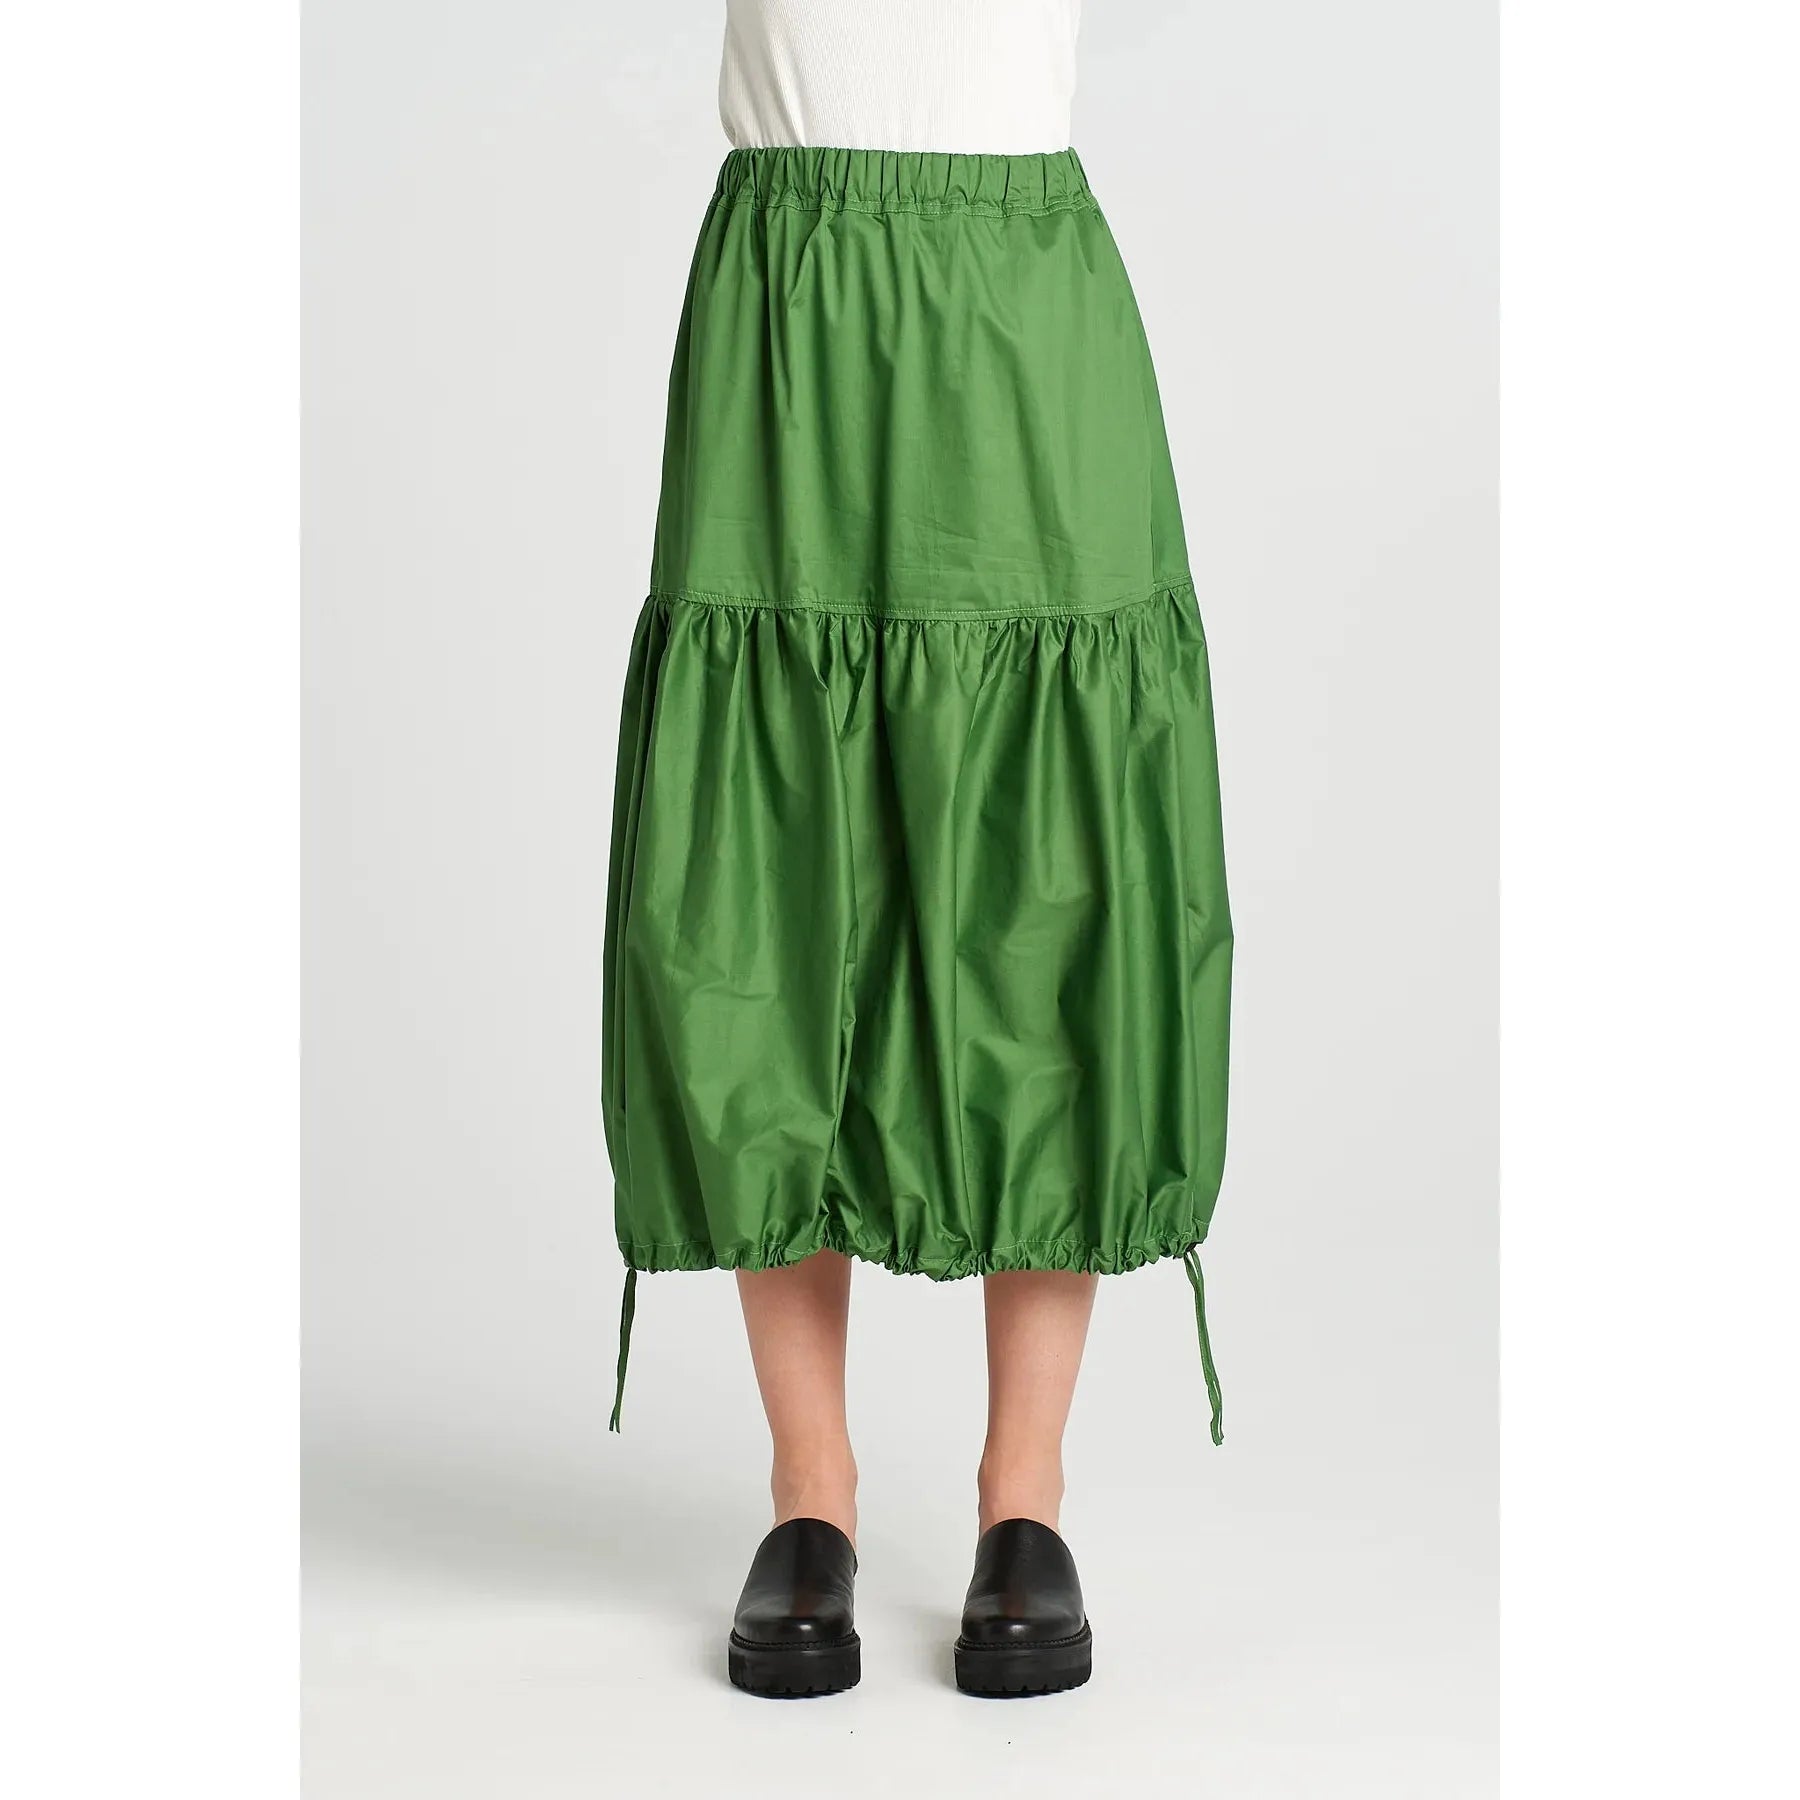 NYNE - Lola Skirt in Tropic | size 14 - RRP $339